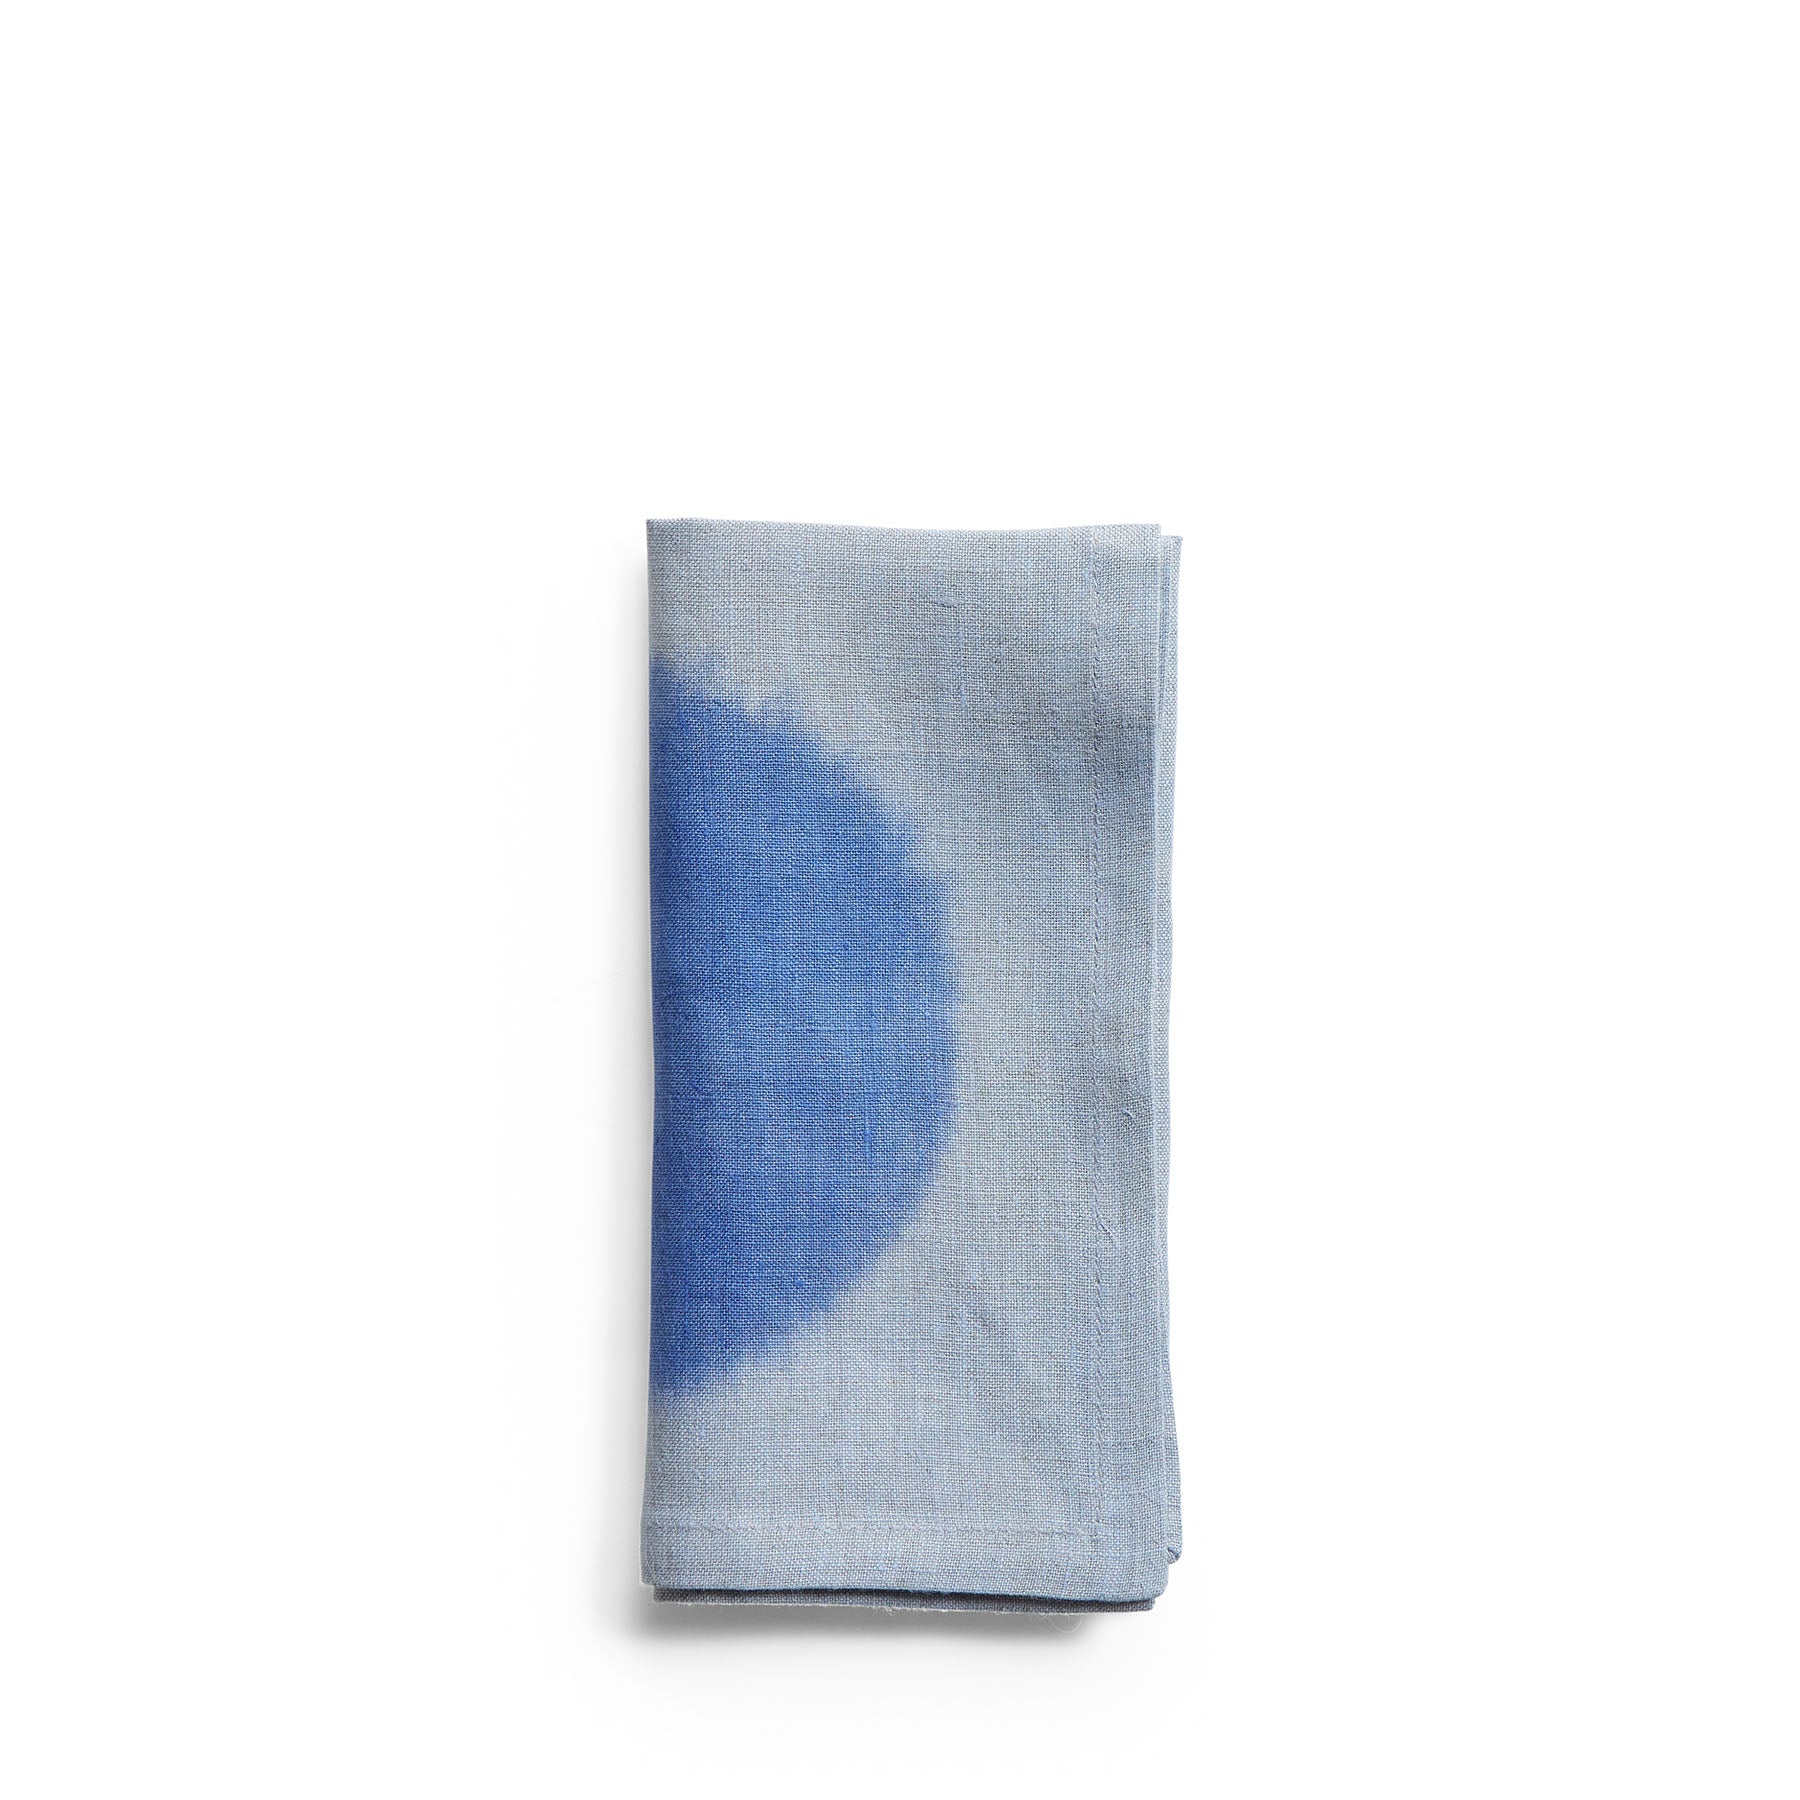 Hand-Painted Linen Napkin in Ultramarine Circle Zoom Image 1